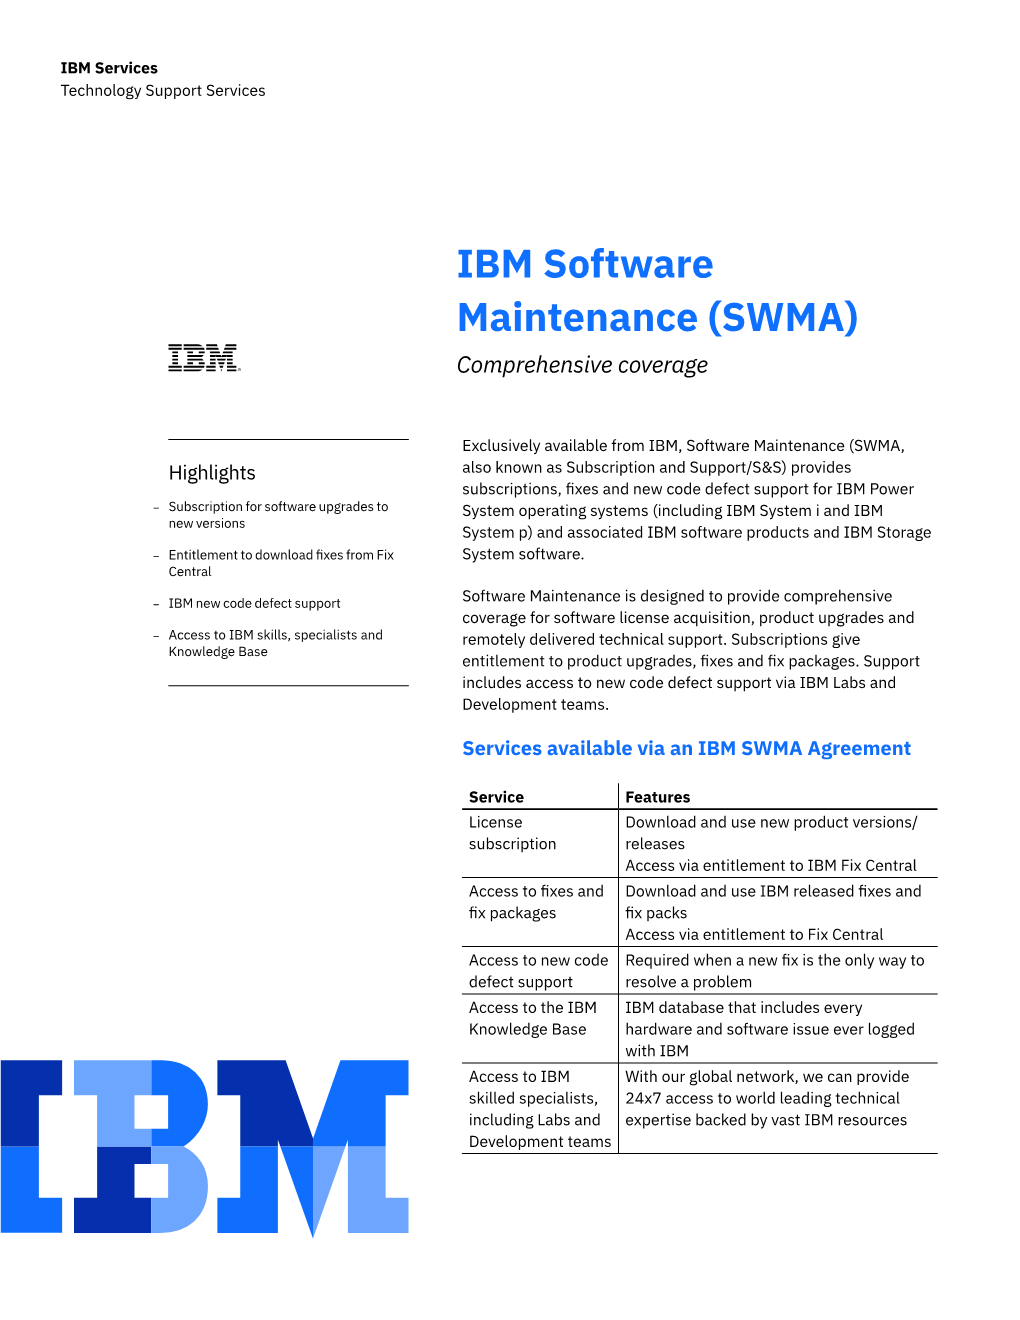 IBM Software Maintenance (SWMA) Comprehensive Coverage